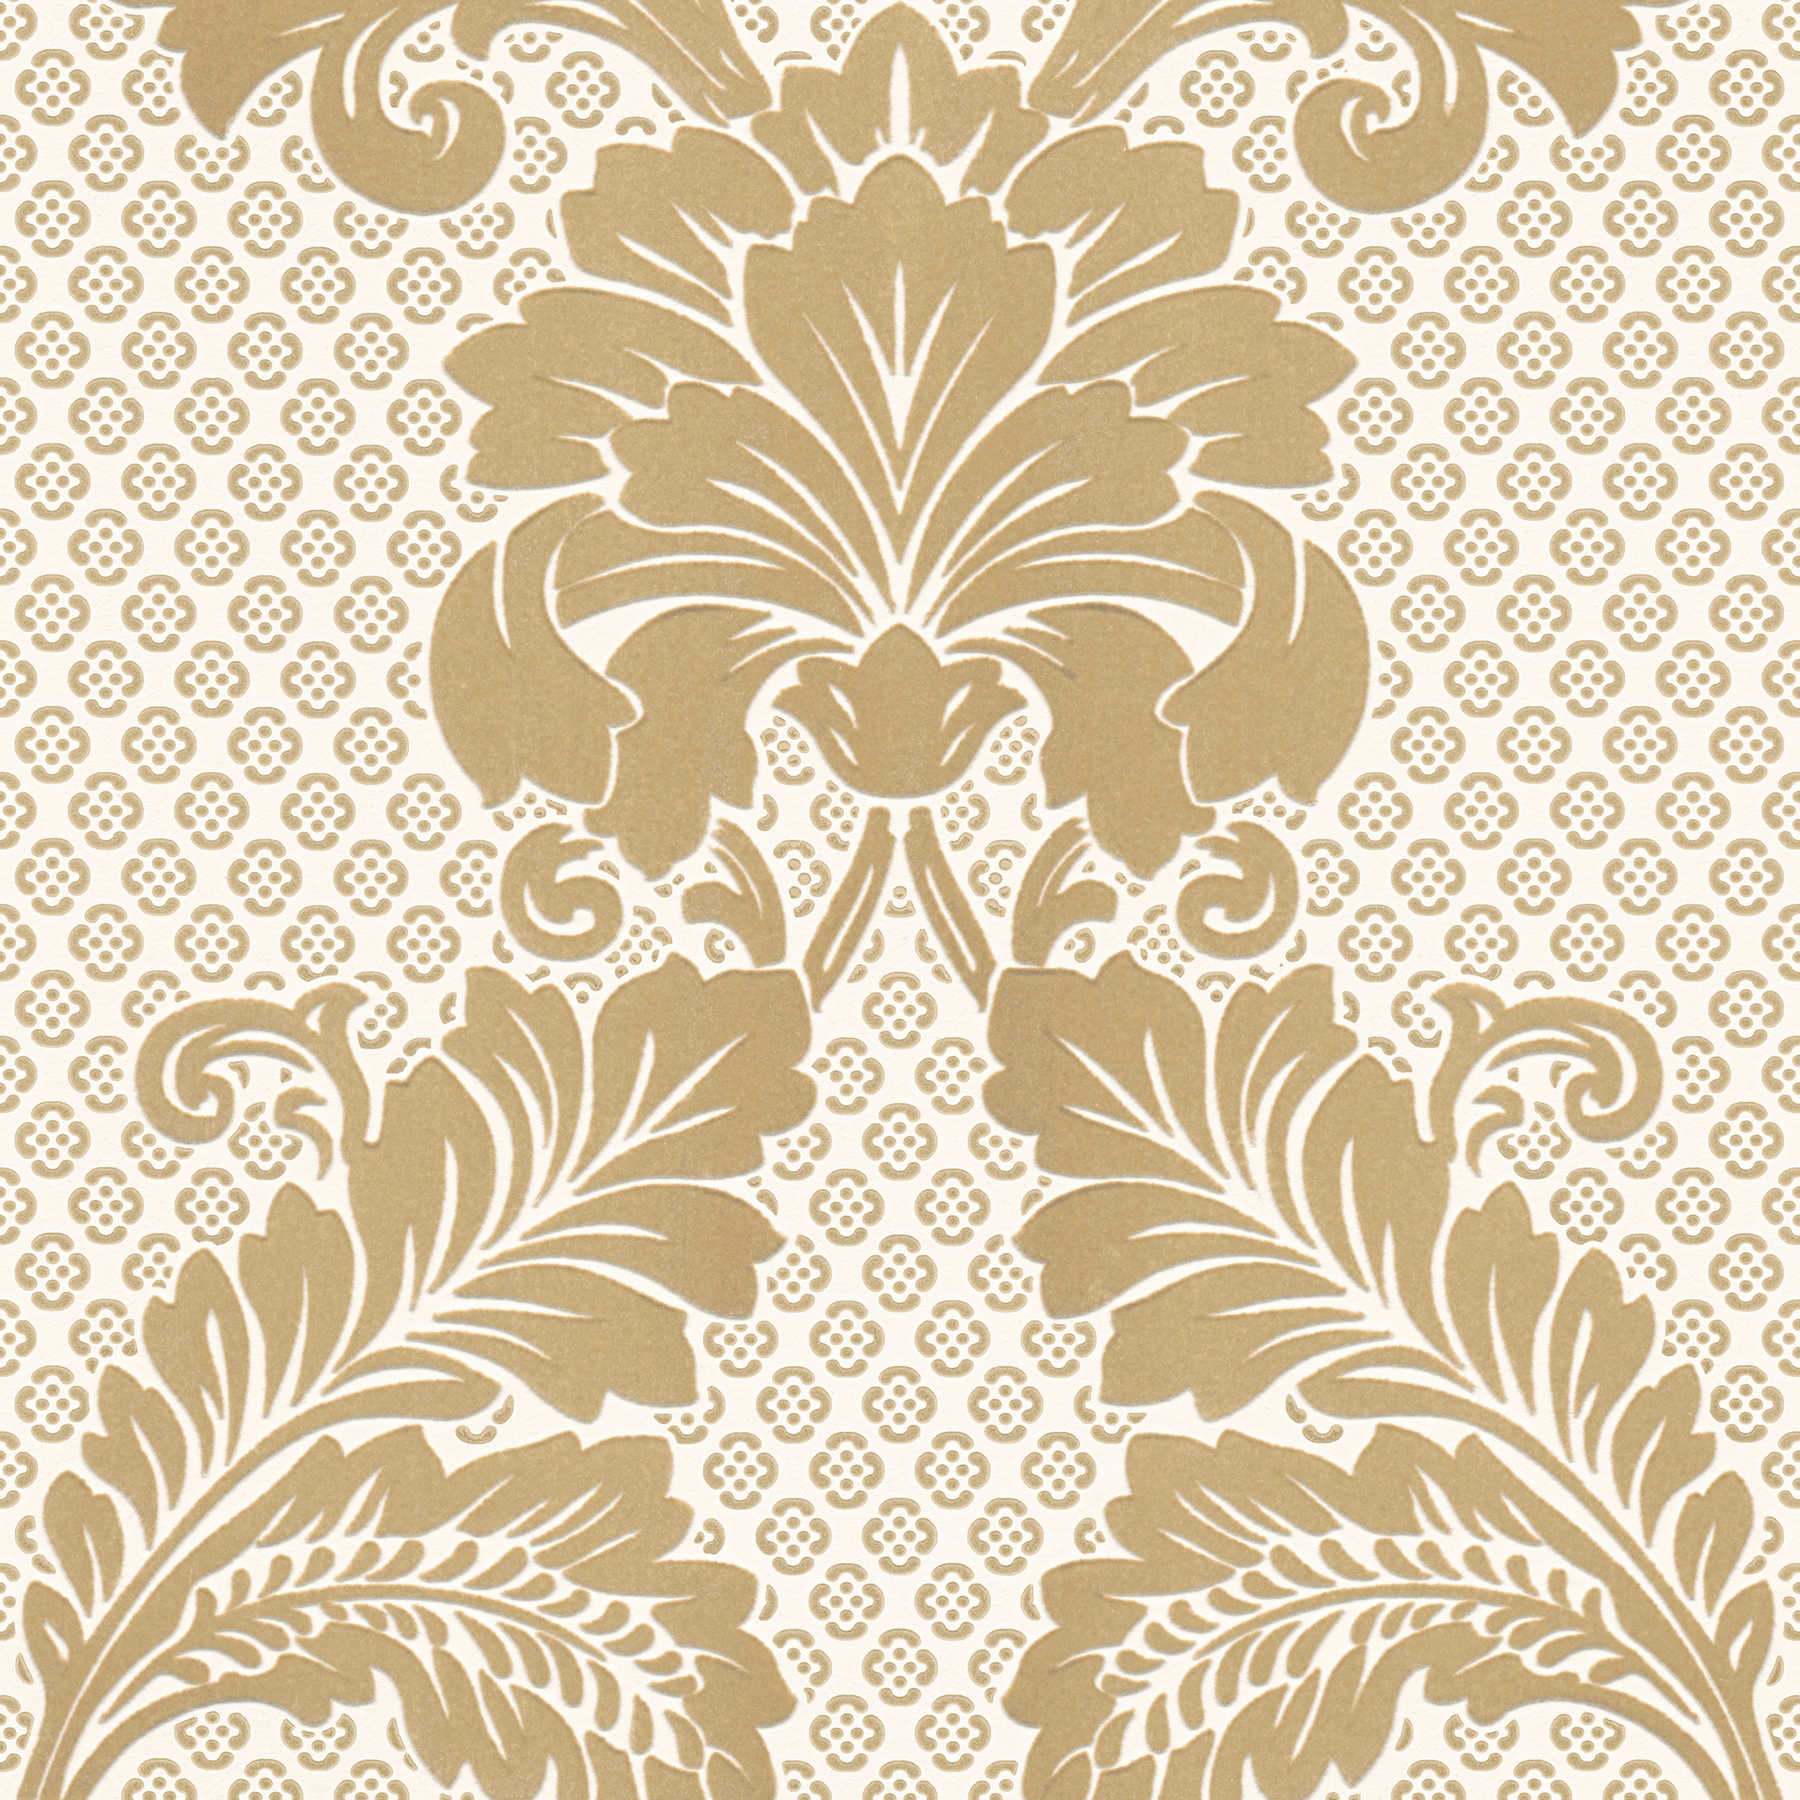 Gemusterte Ornamenttapete mit großem Floralen Motiv – Gold, Creme
